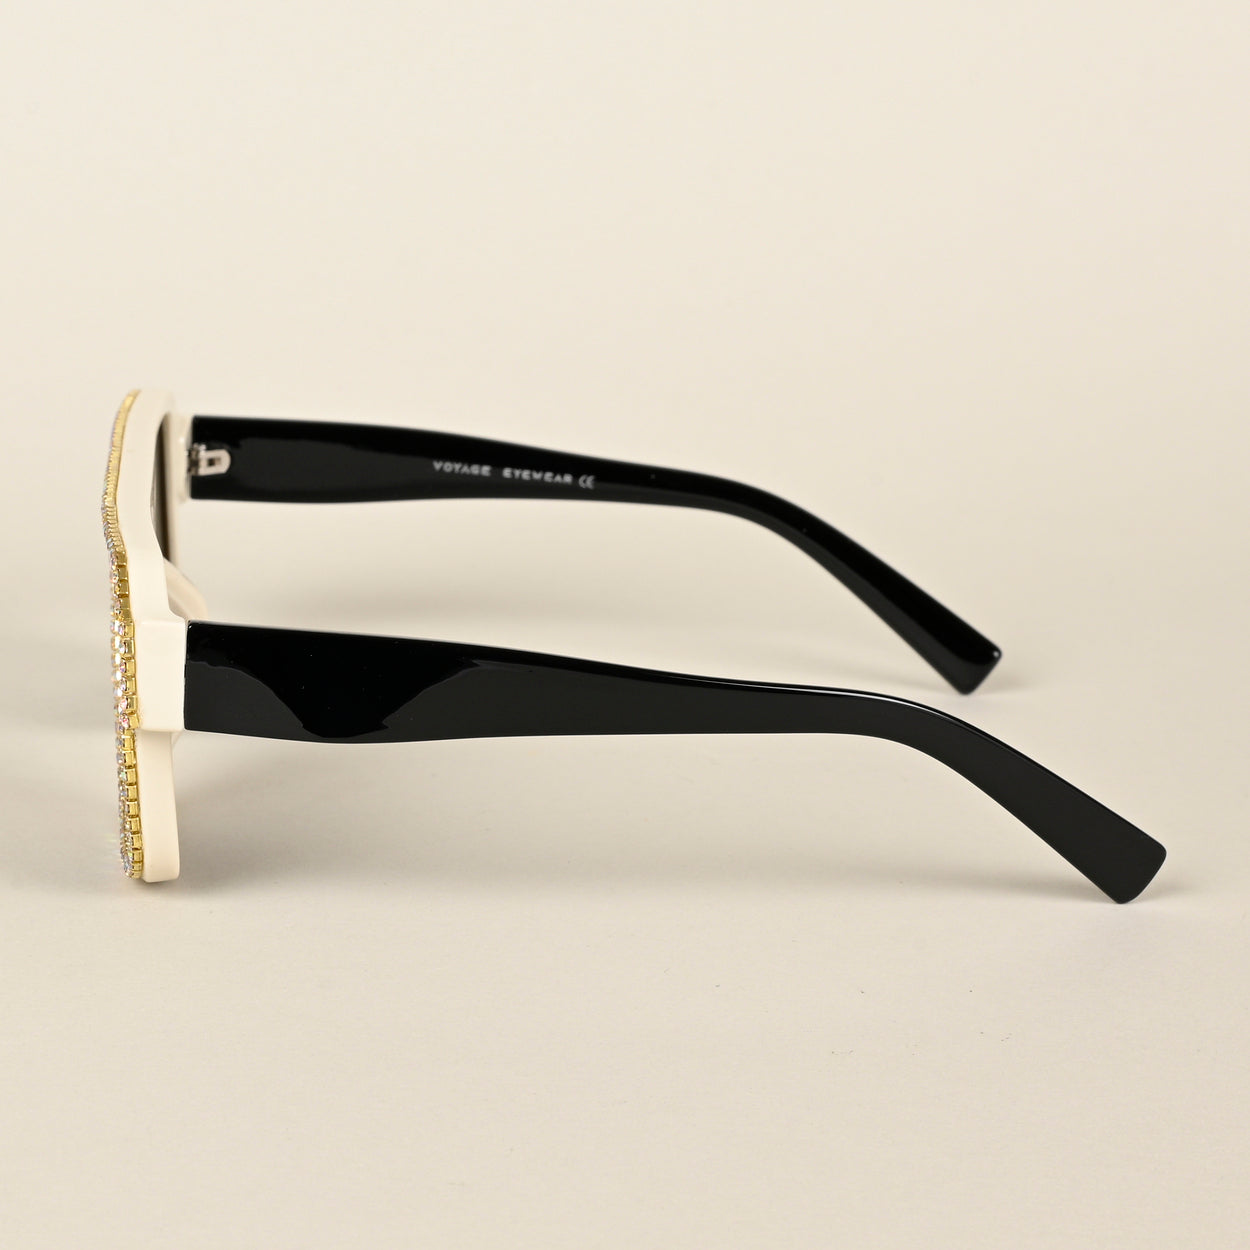 Voyage Black Wayfarer Polarized Sunglasses for Men & Women (3996PMG4356)